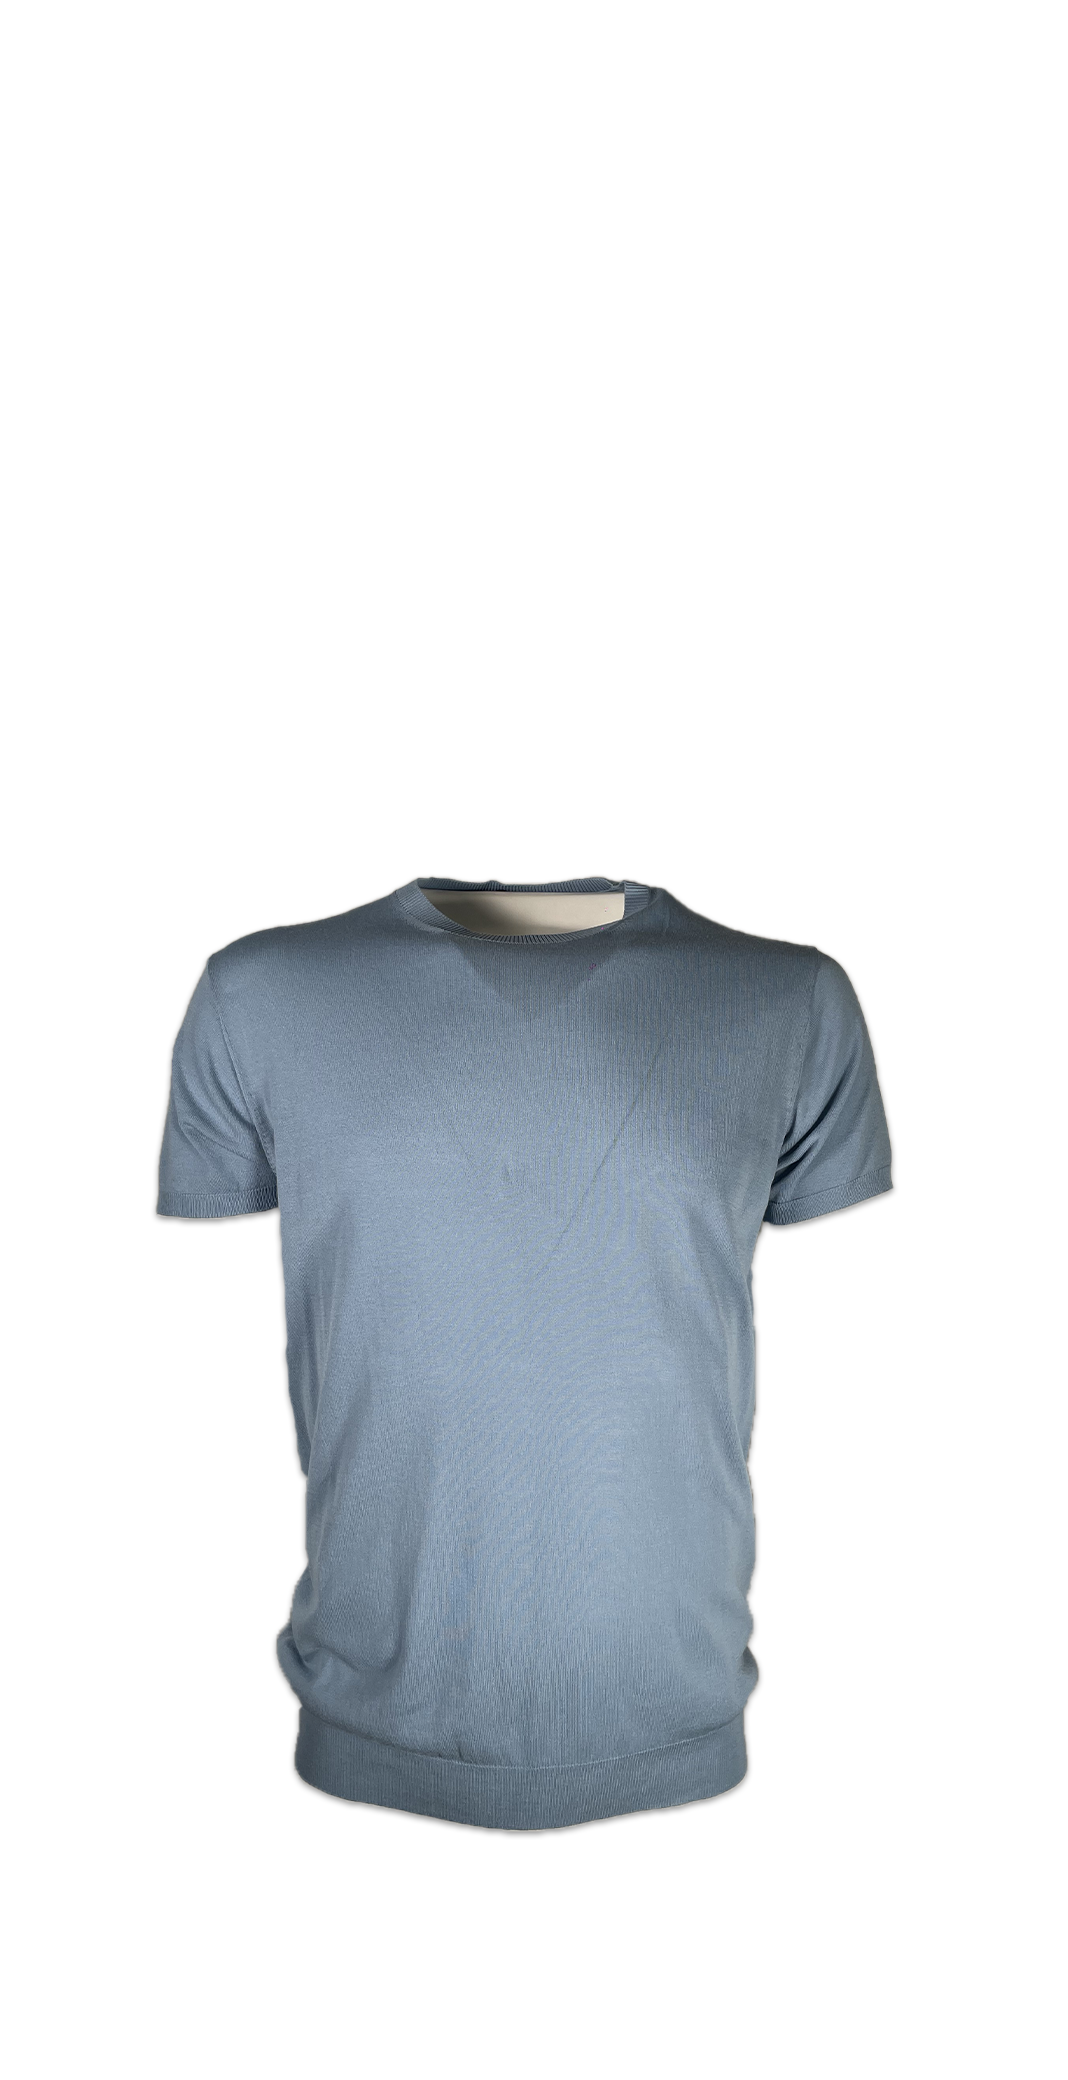 Blu Cashmere T-shirt monocolore